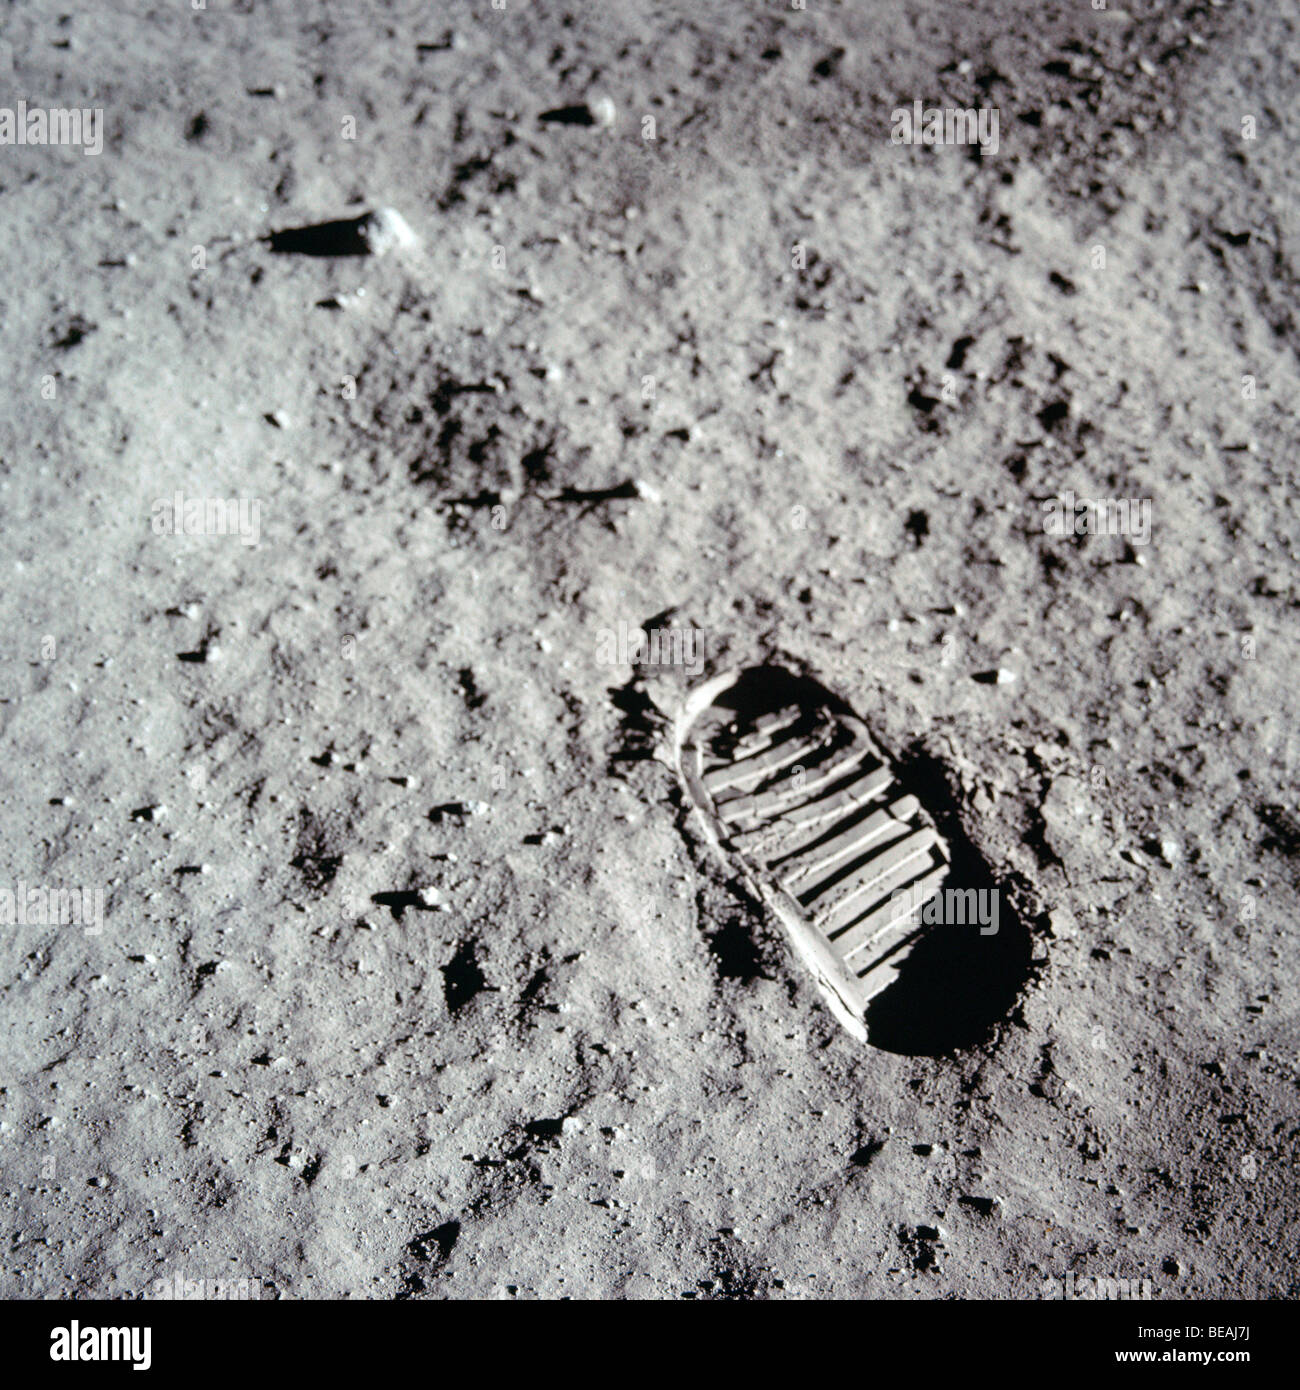 Astronaut footprint from the first lunar landing. Apollo 11. Optimised version of an original NASA image. Credit NASA Stock Photo